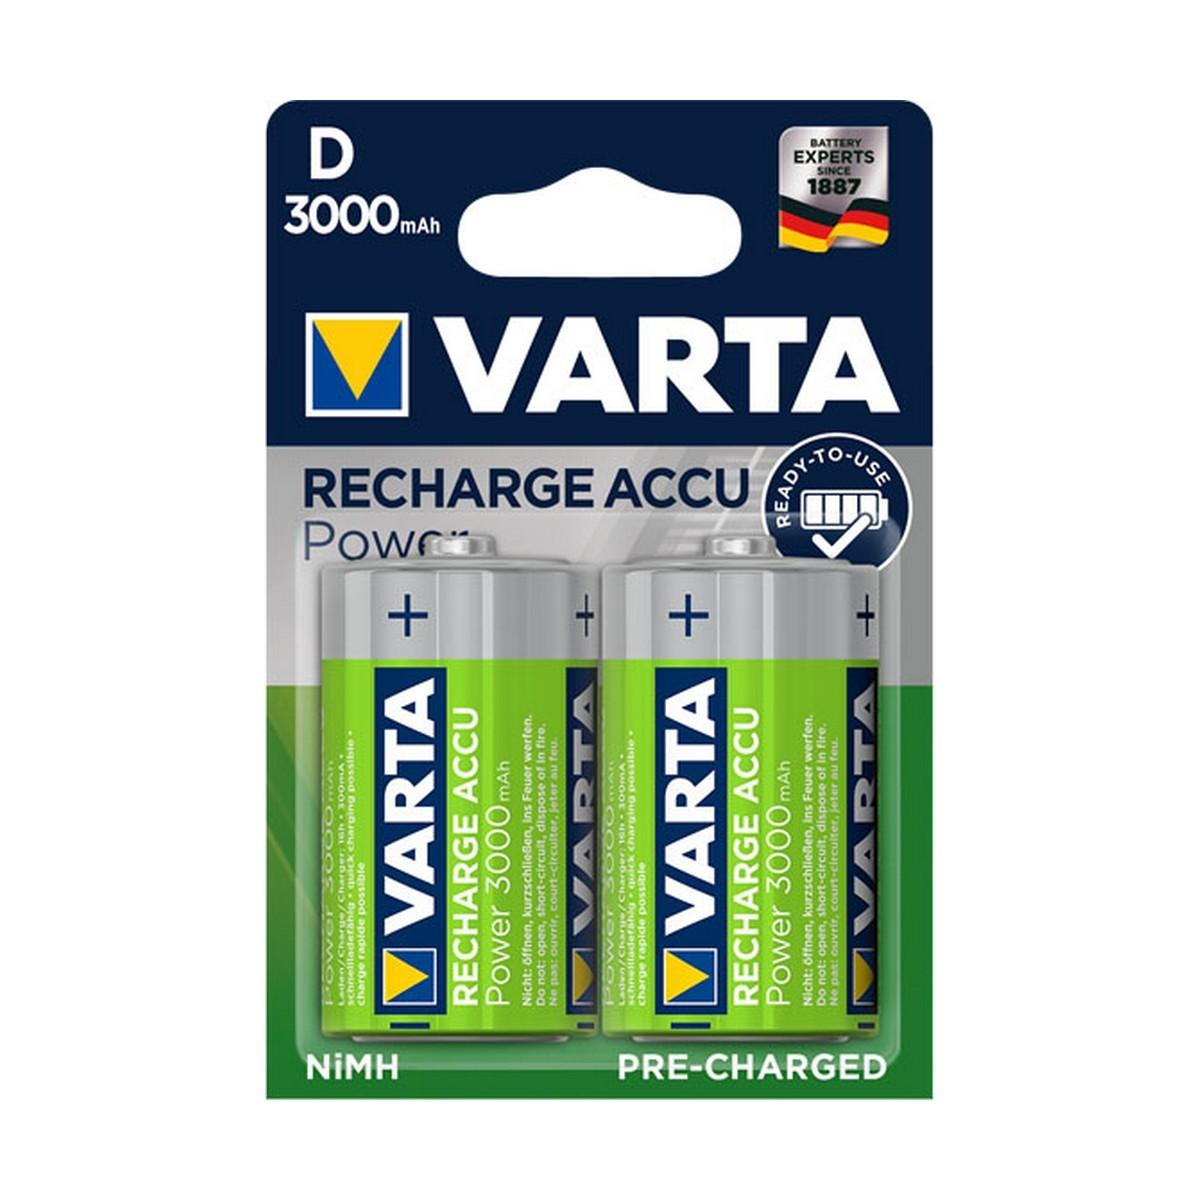 Se Varta Recharge Charge Accu Power D 3000mah 2 Pack - Batteri hos Boligcenter.dk